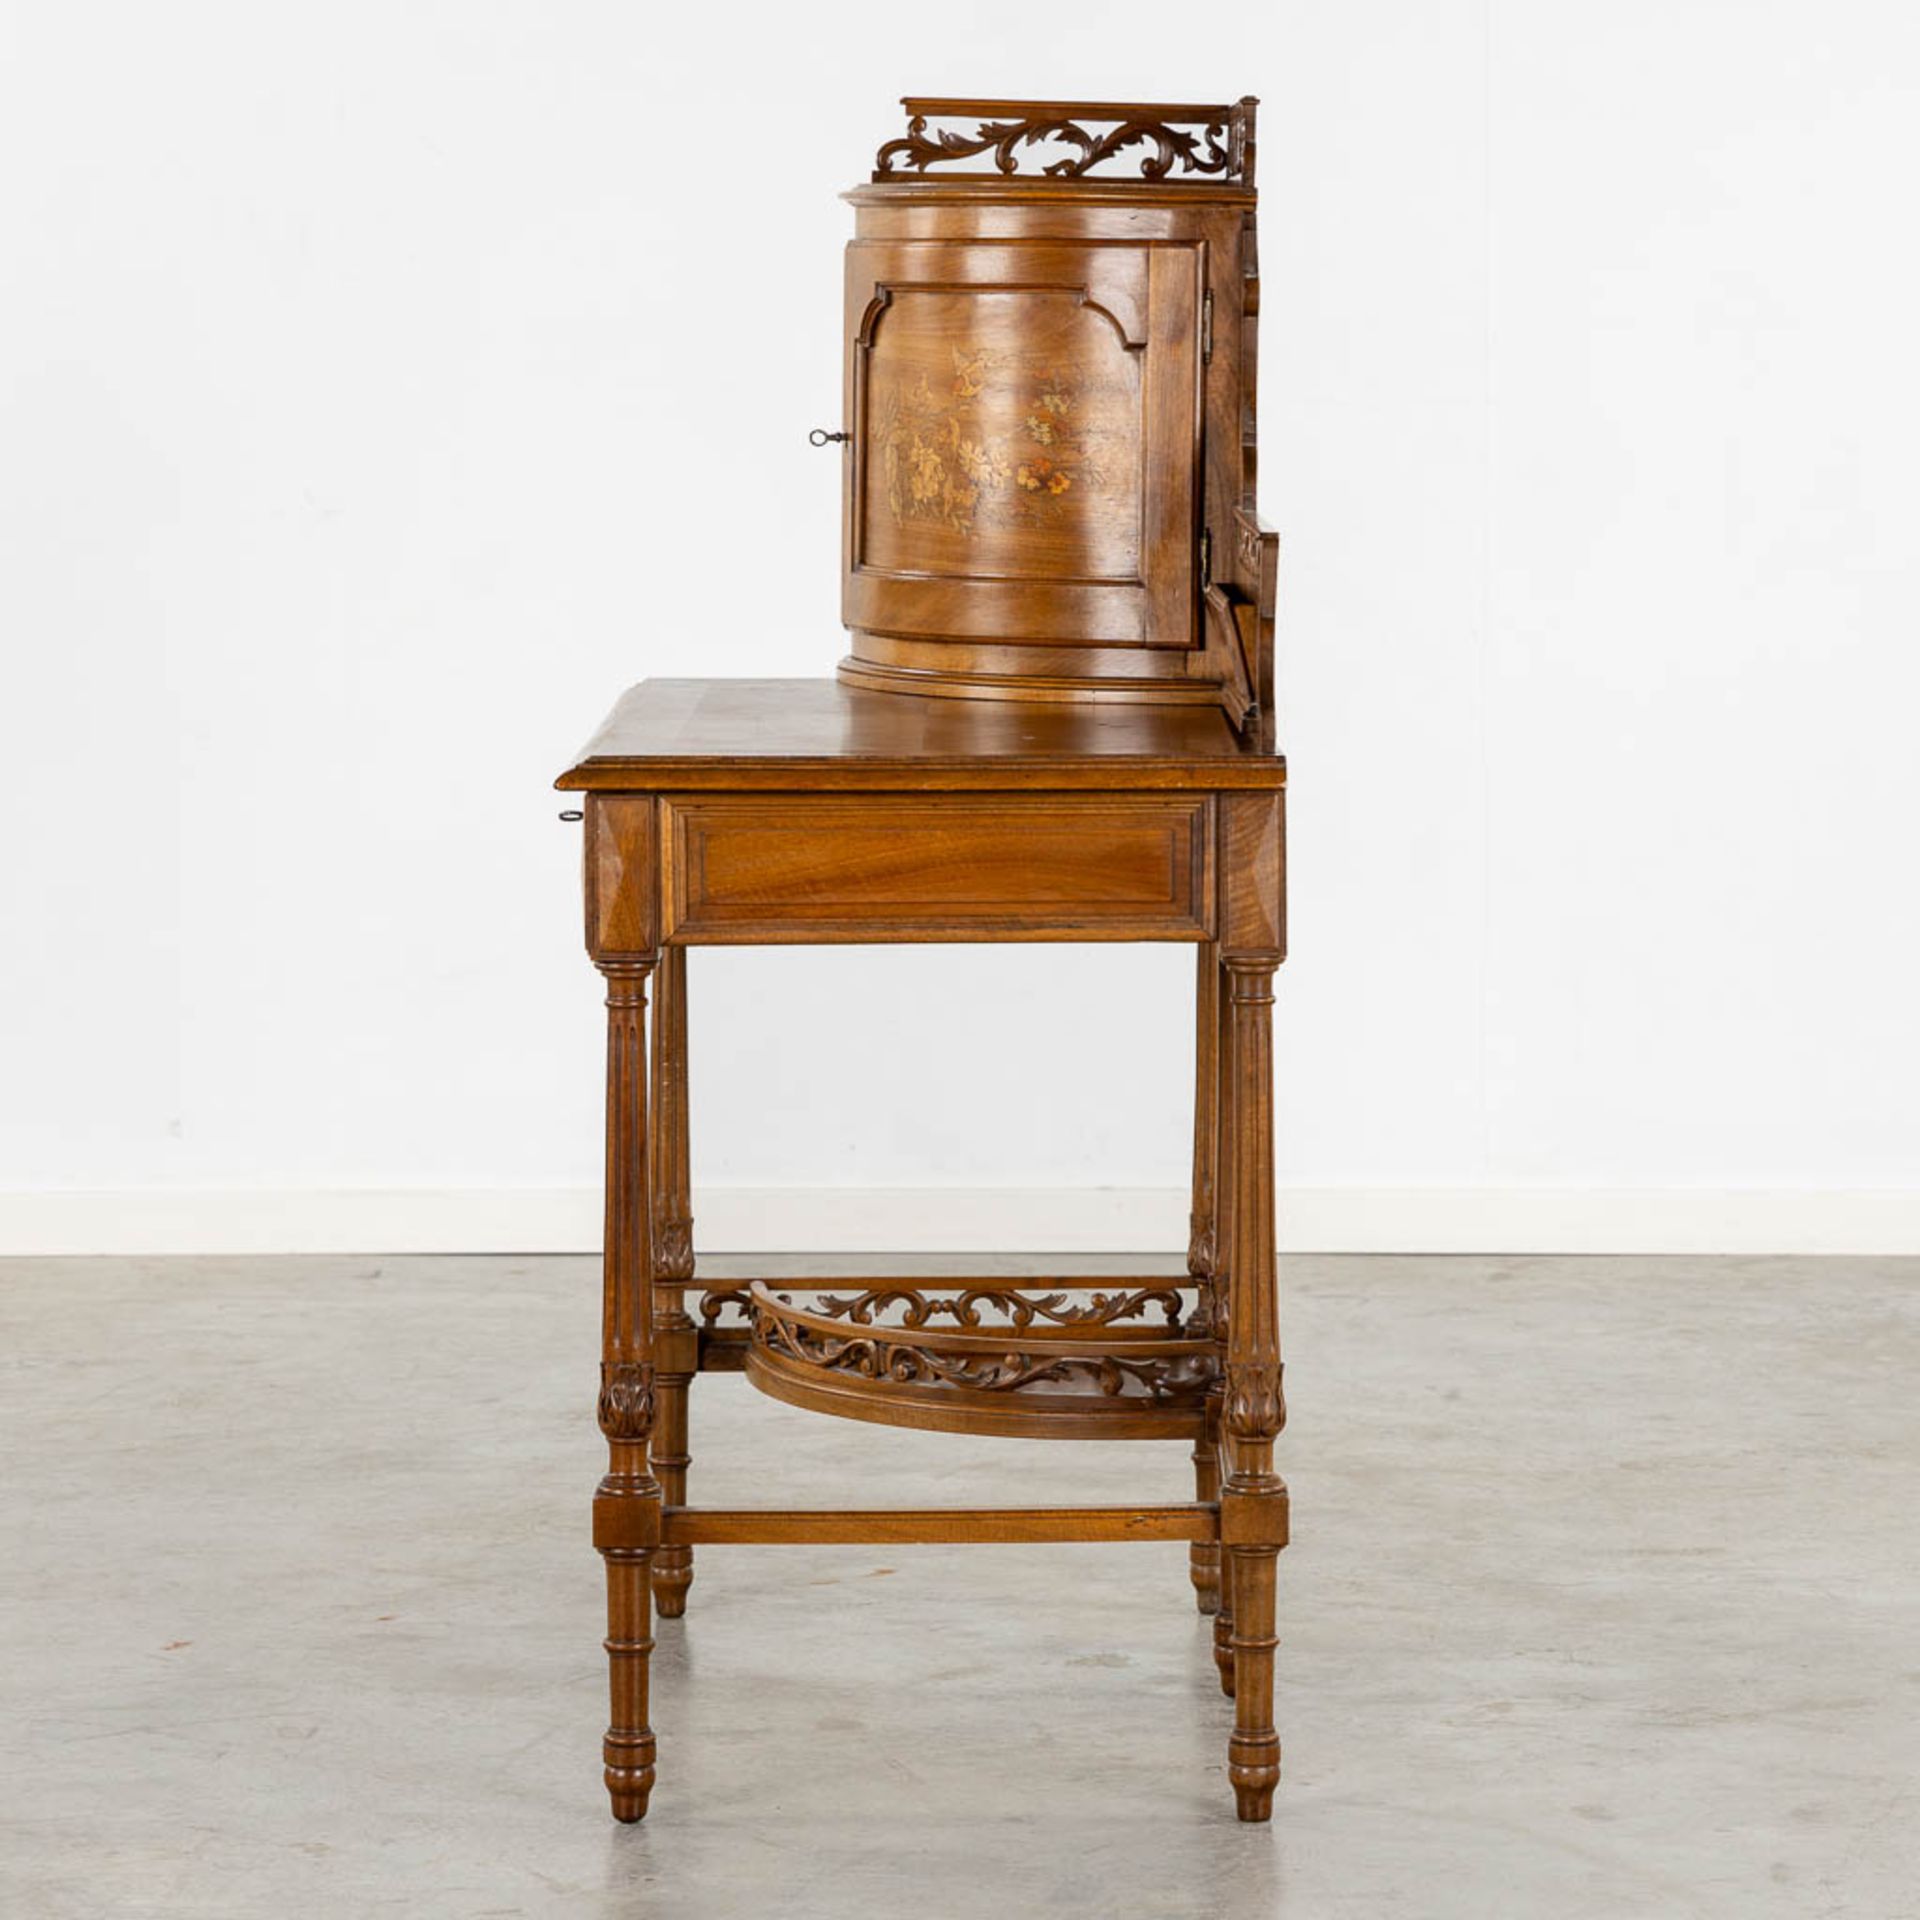 An elegant ladies' desk, walnut with marquetry inlay. 19th C. (L:50 x W:88 x H:120 cm) - Image 5 of 12